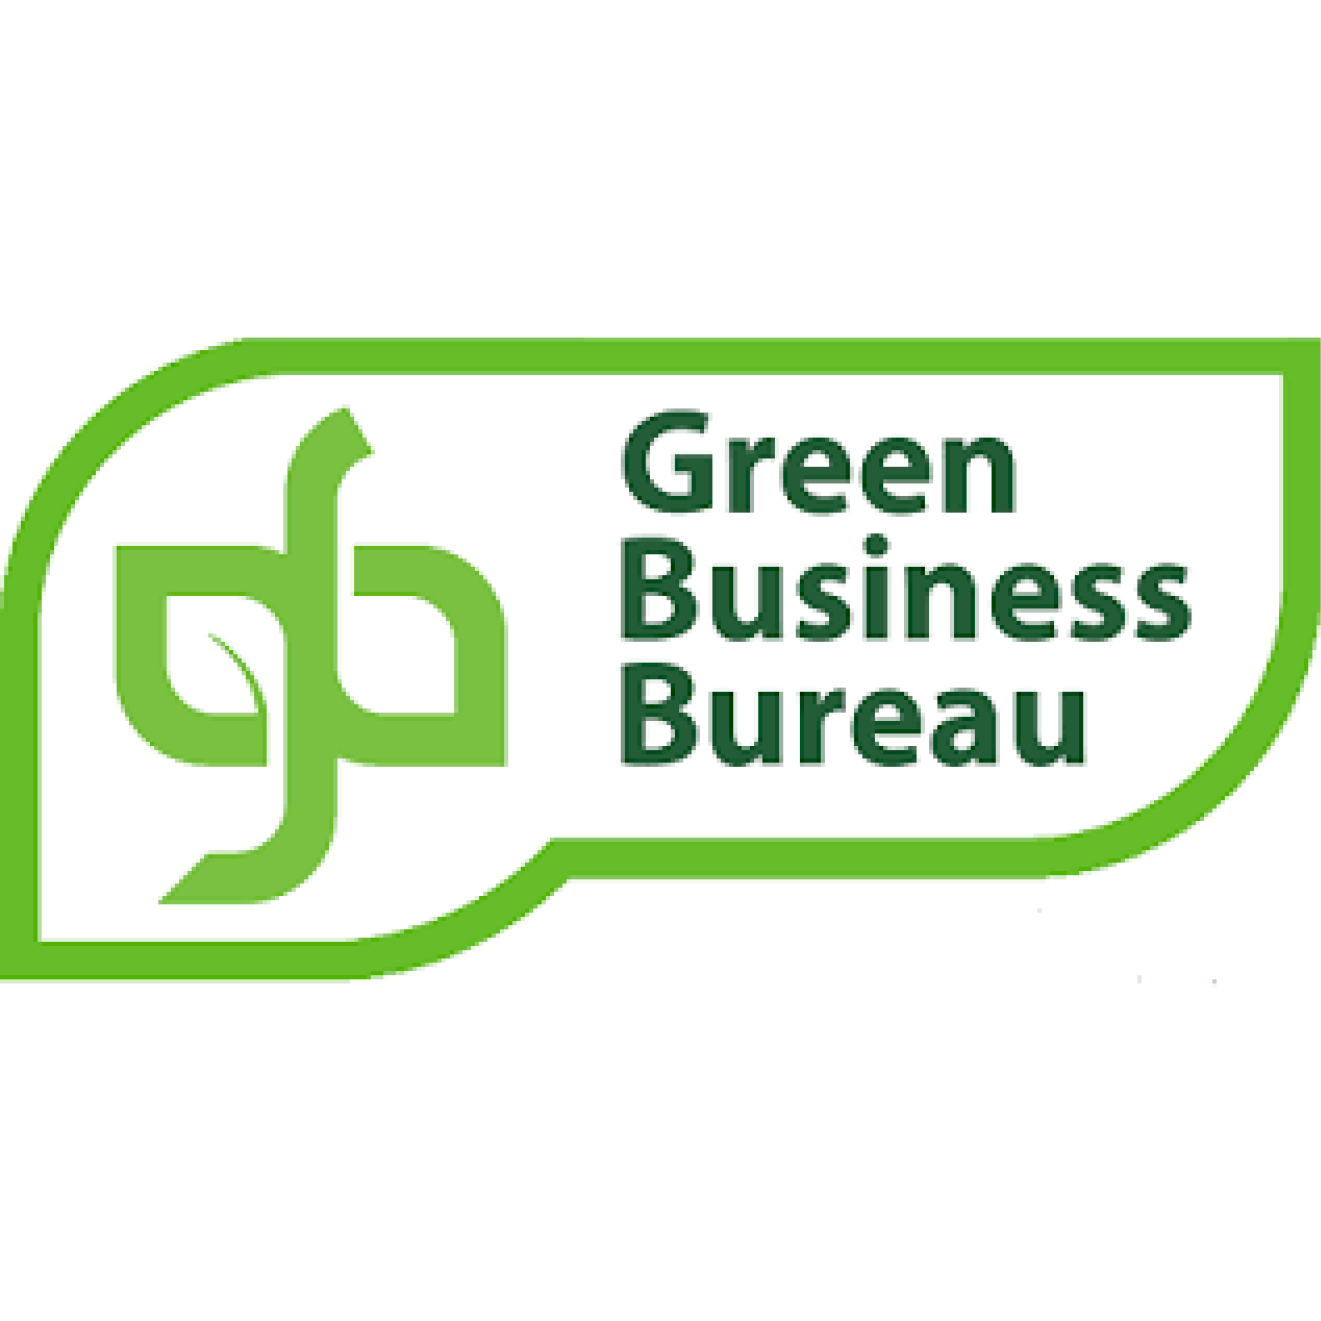 Green business bureau logo